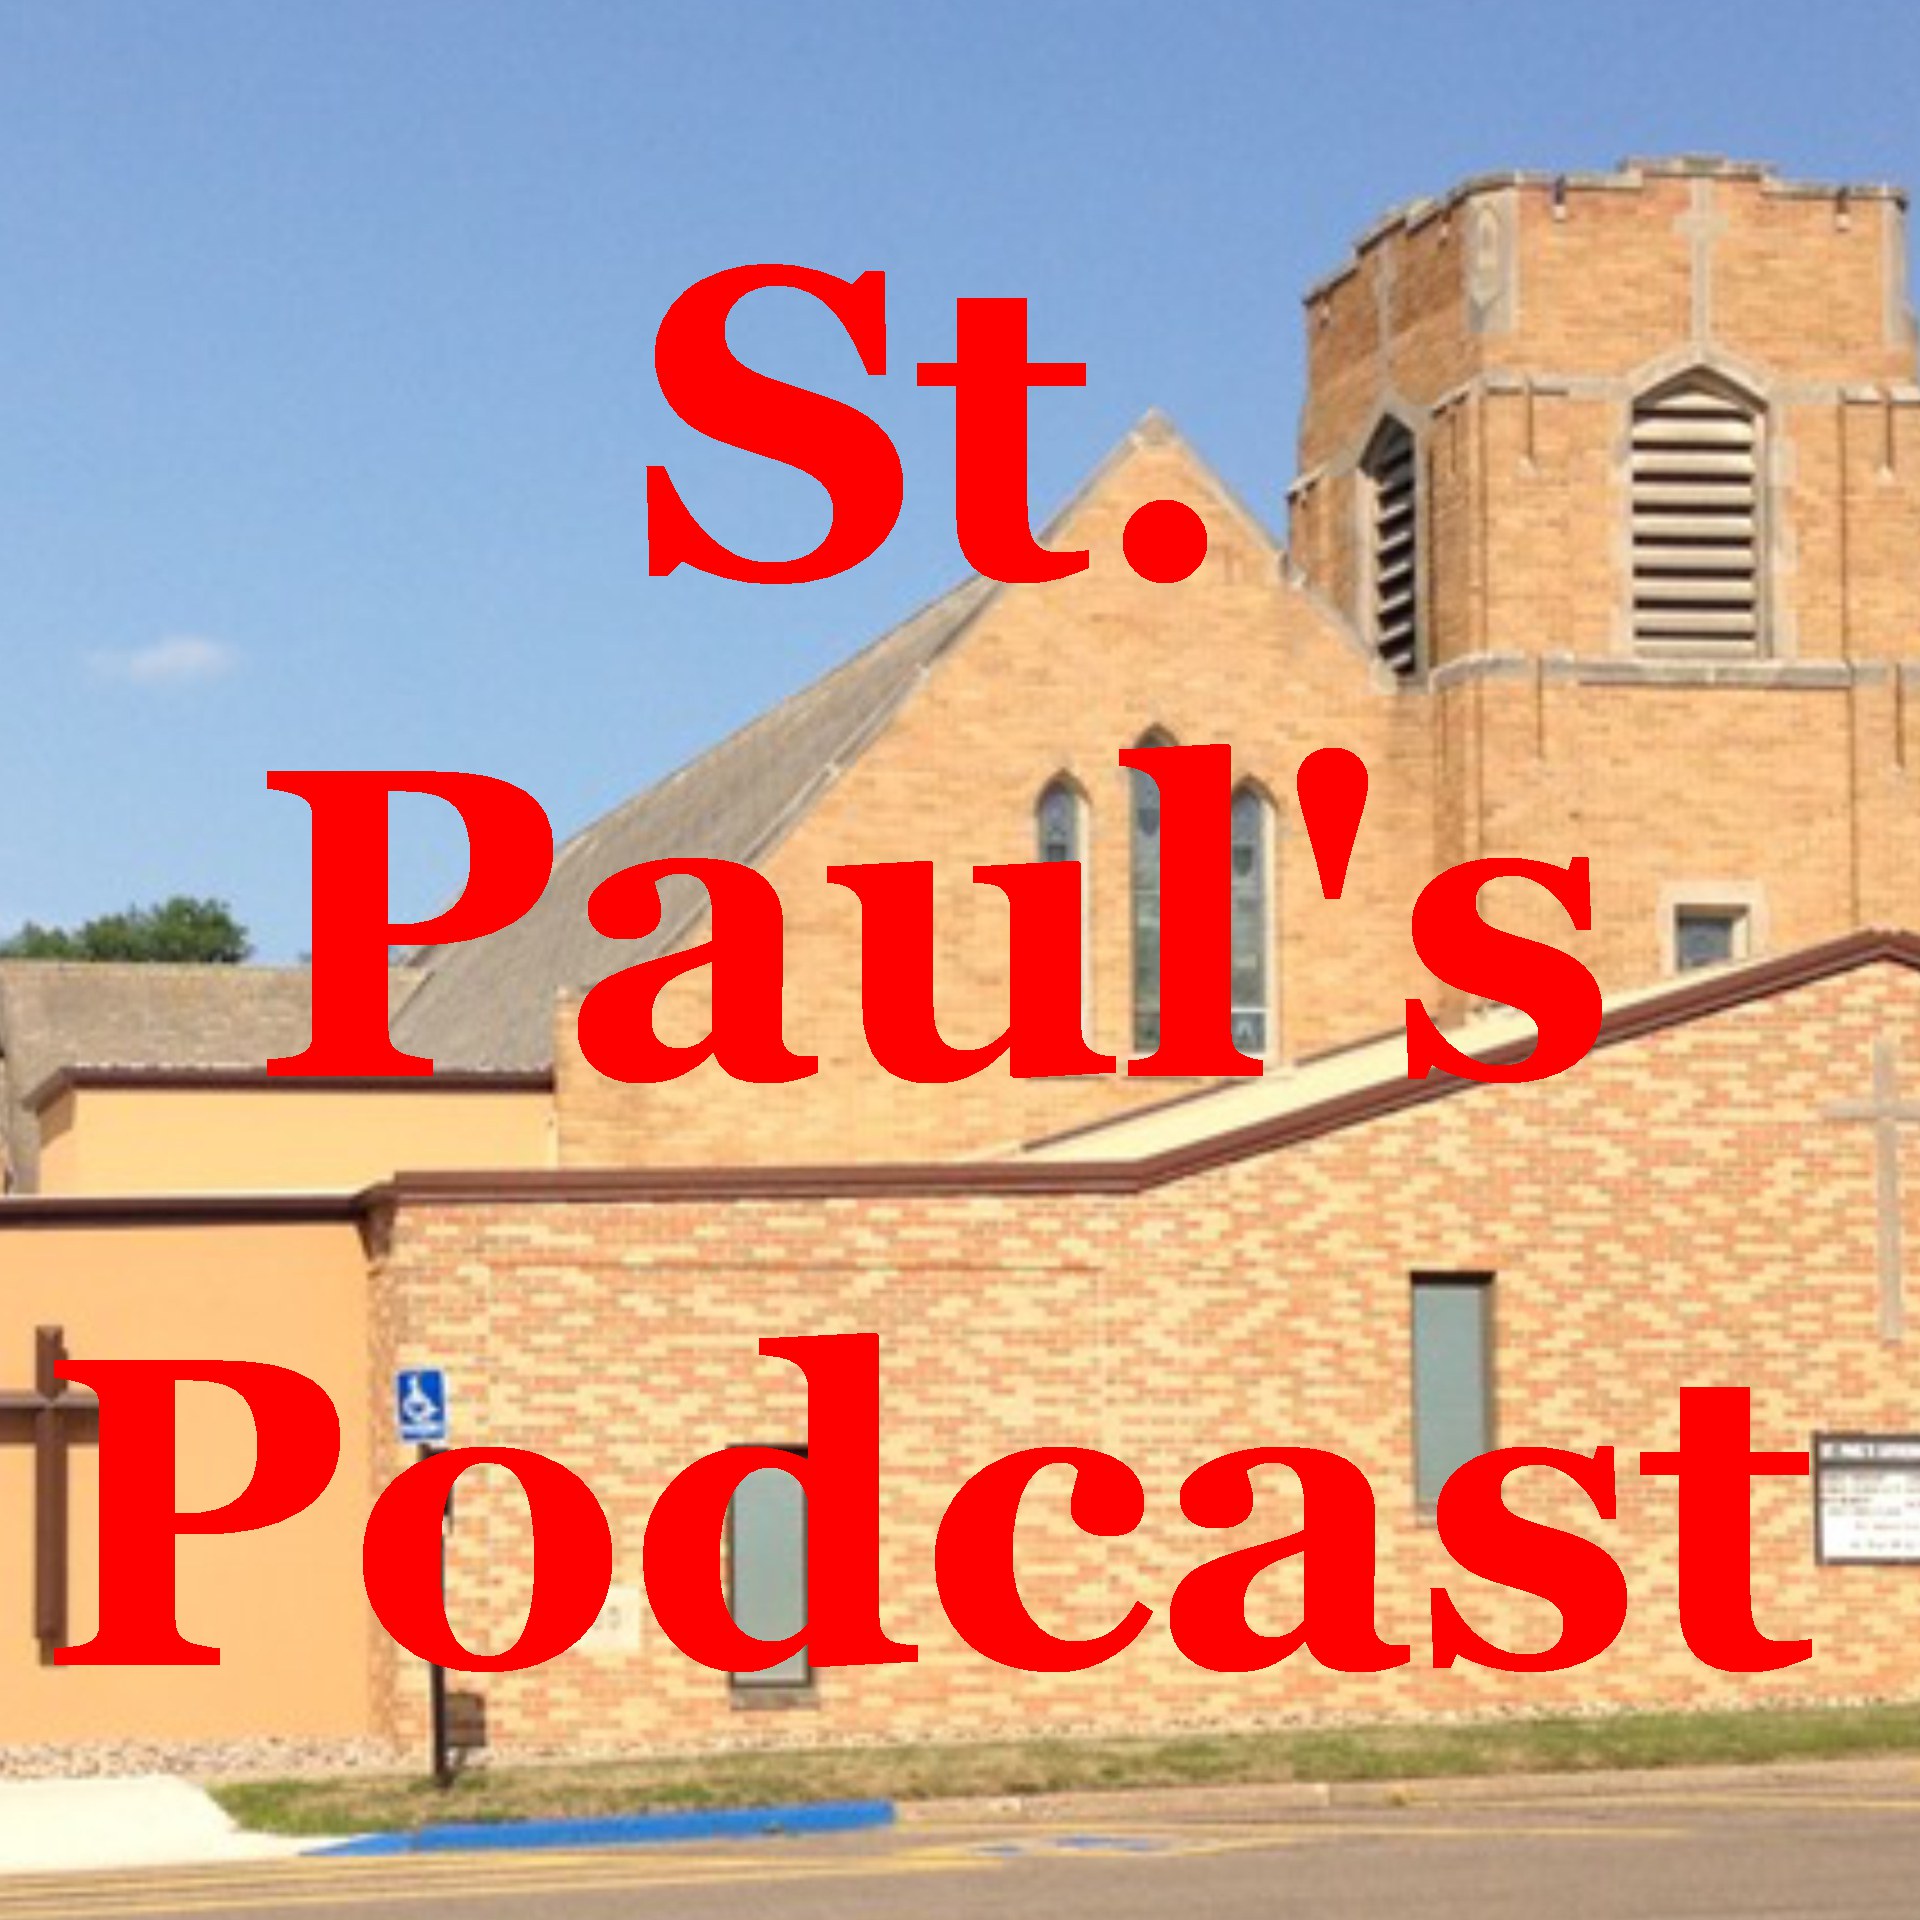 St. Paul's Lutheran Church Podcast - Ireton,IA